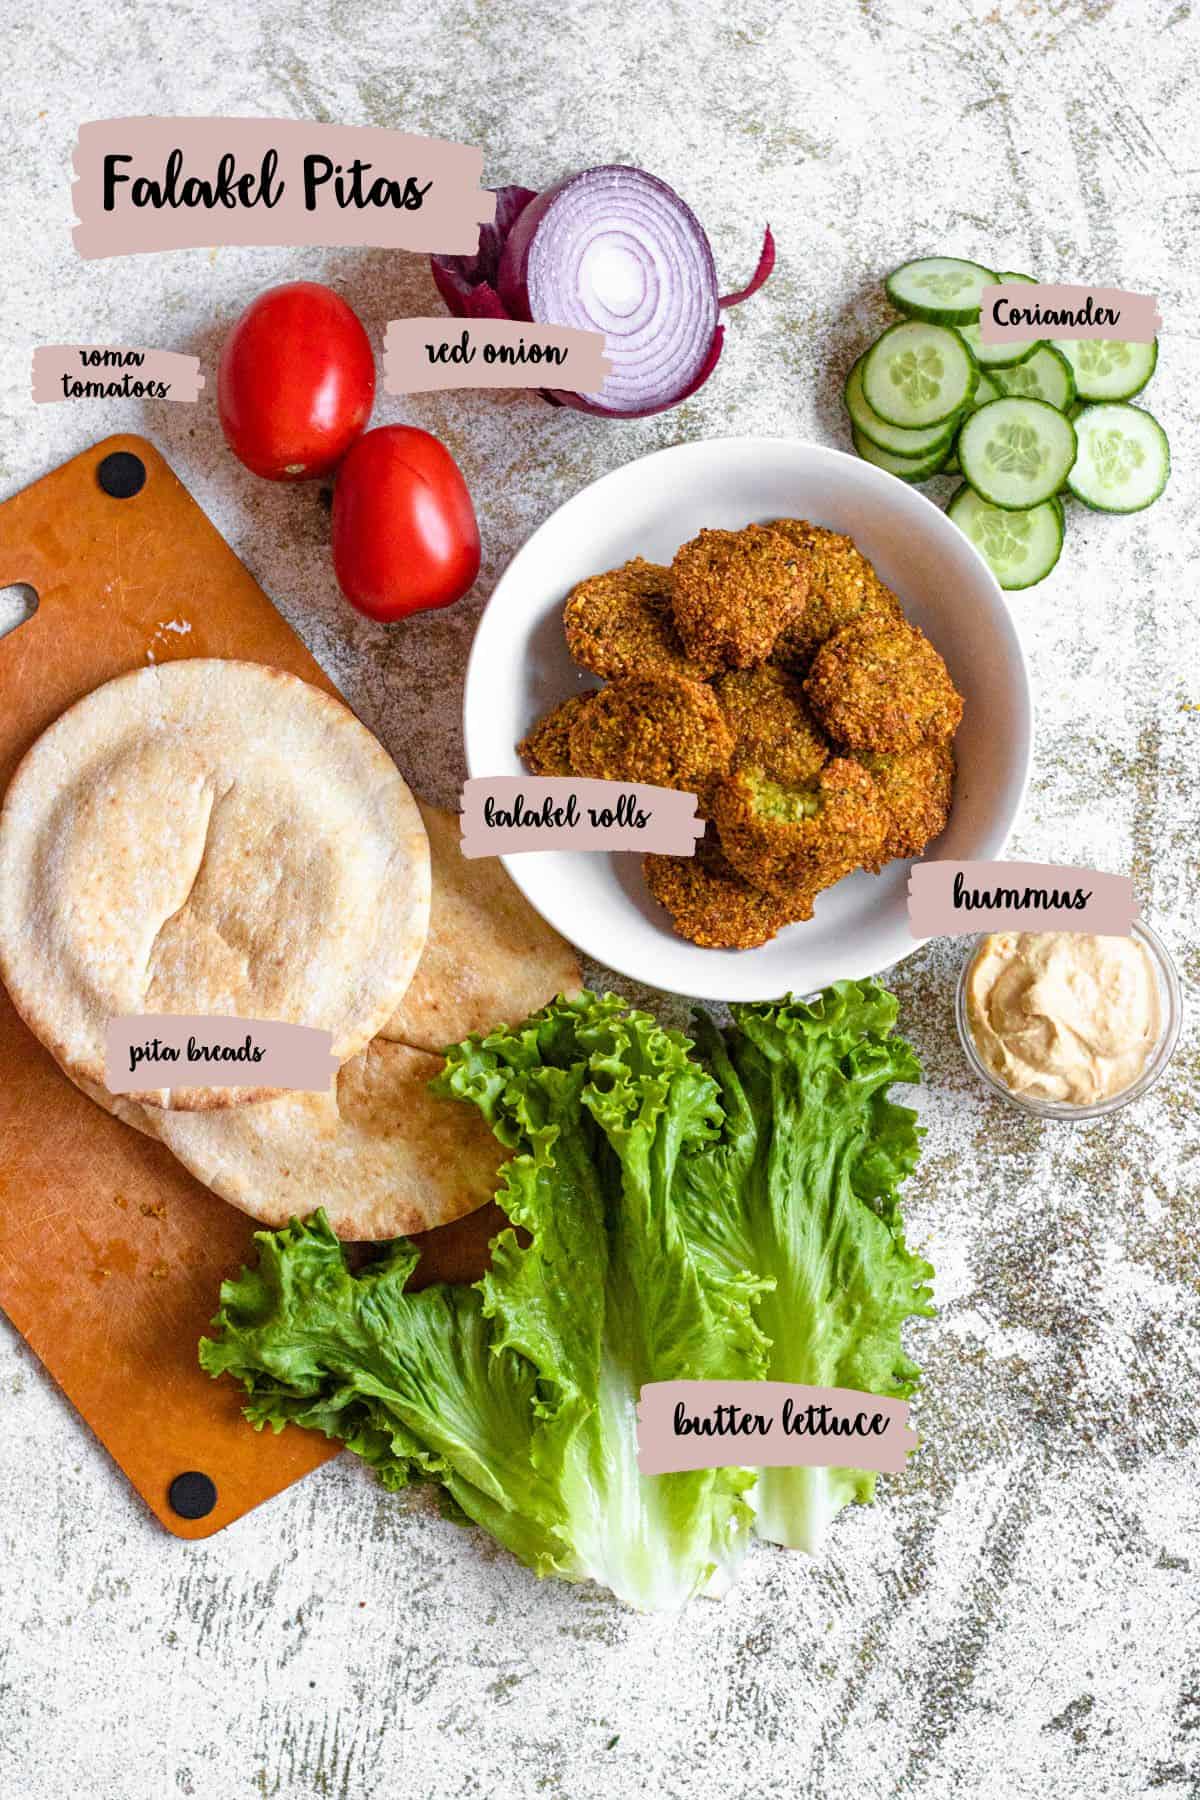 Ingredients used to put together a falafel pita. 